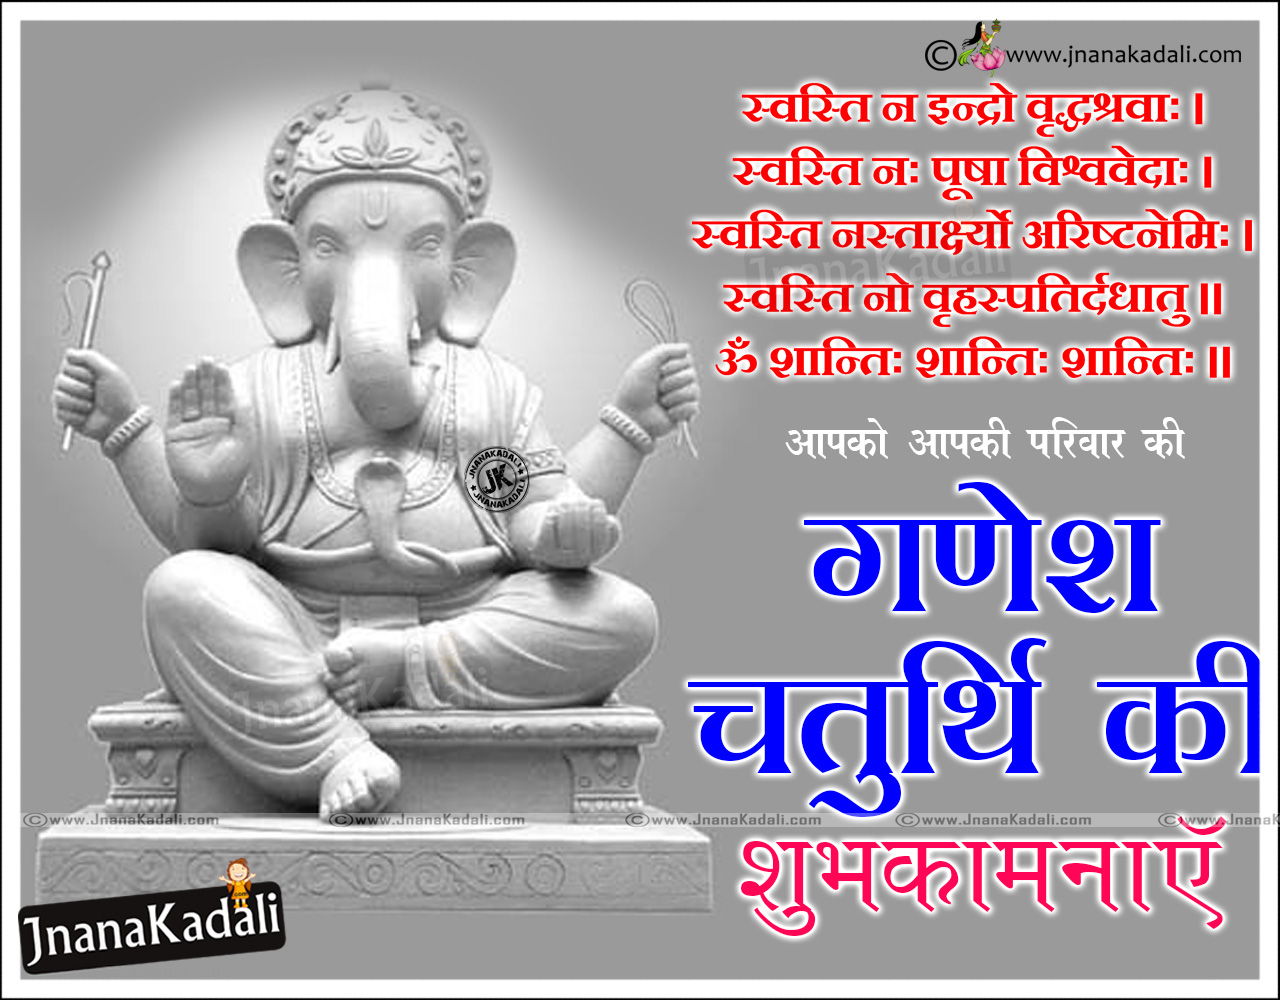 Happy Ganesh Chaturthi 2016 Quotes Greetings in Hindi Language ...